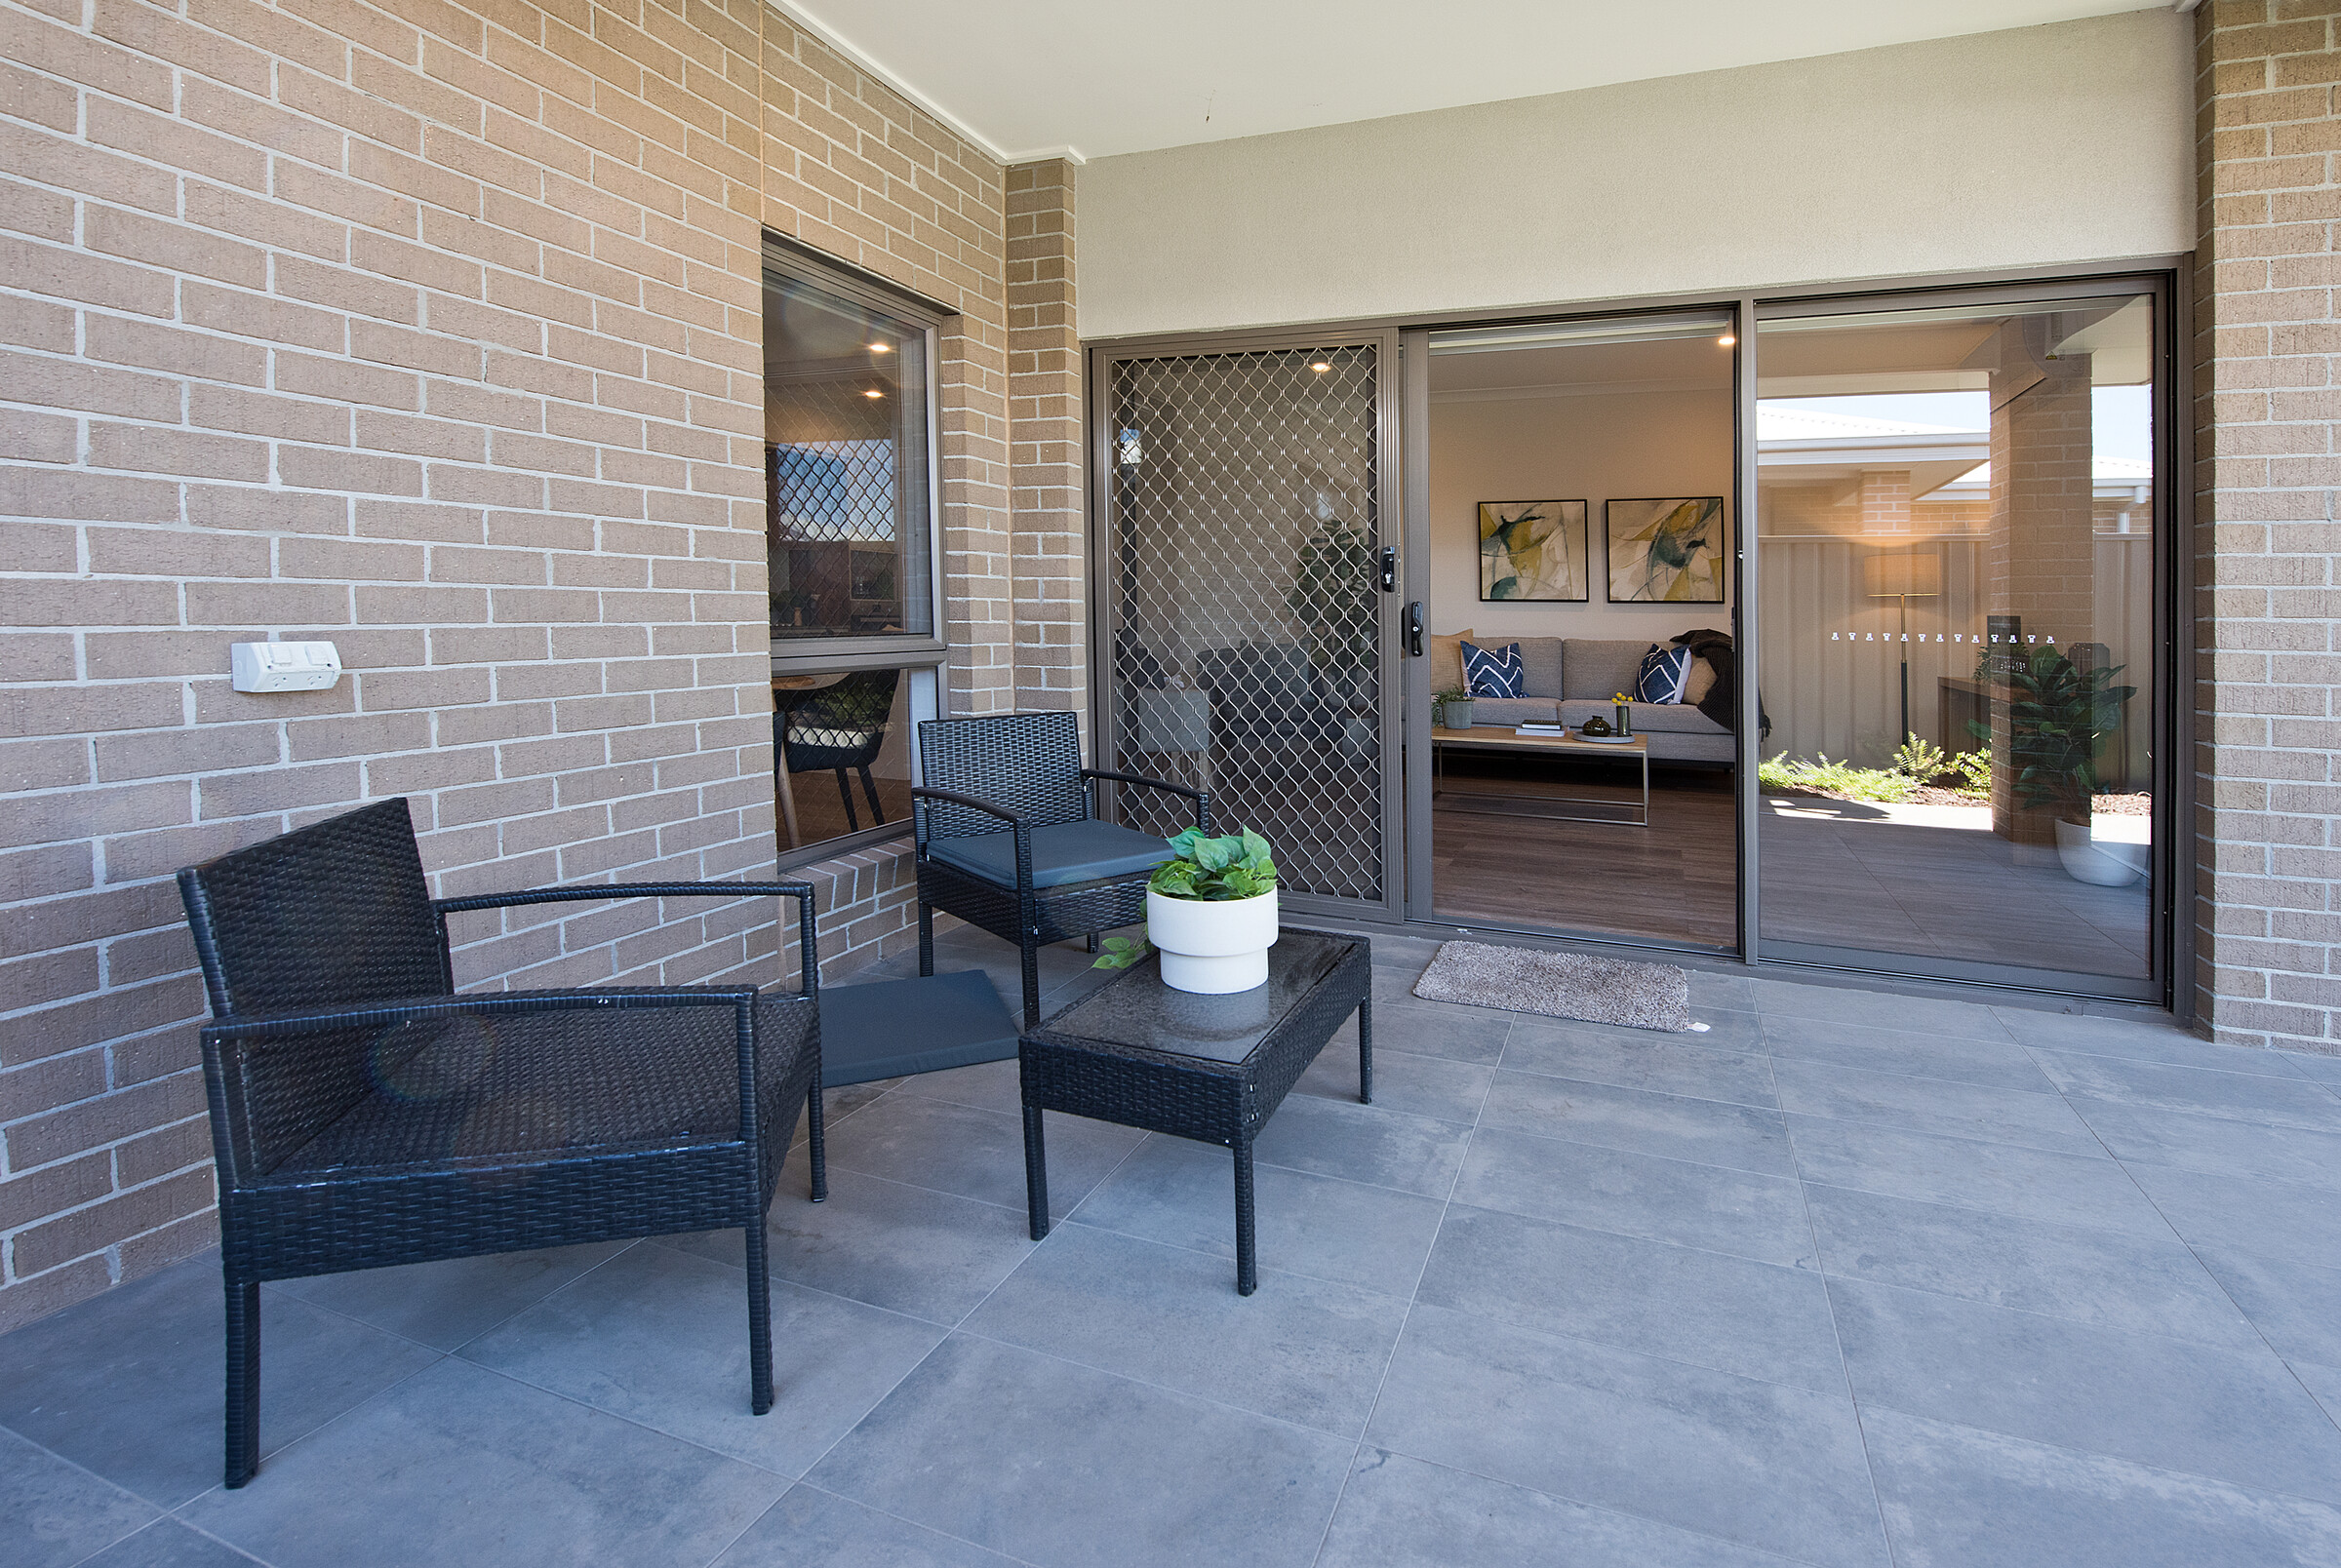 Sherwin Rise villa patio area with patio furniture